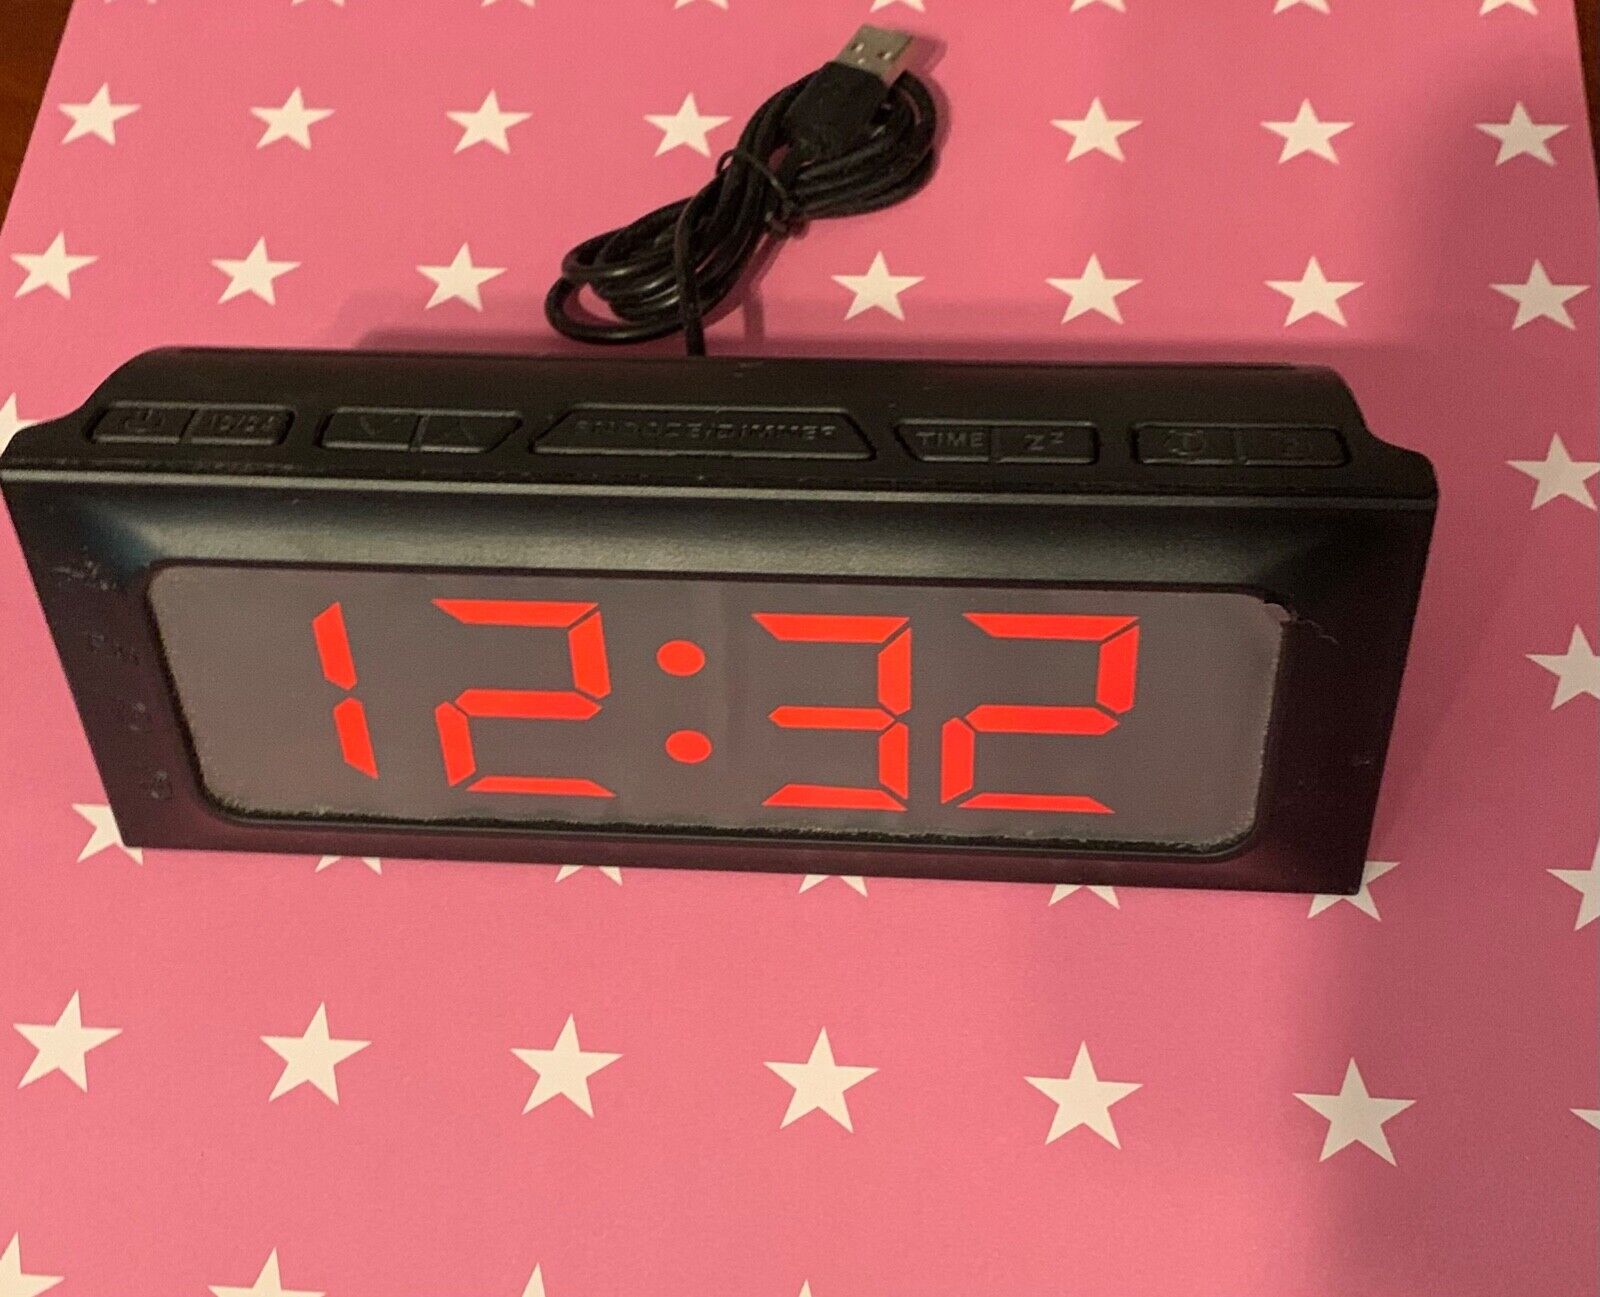 How To Set A Tzumi Alarm Clock